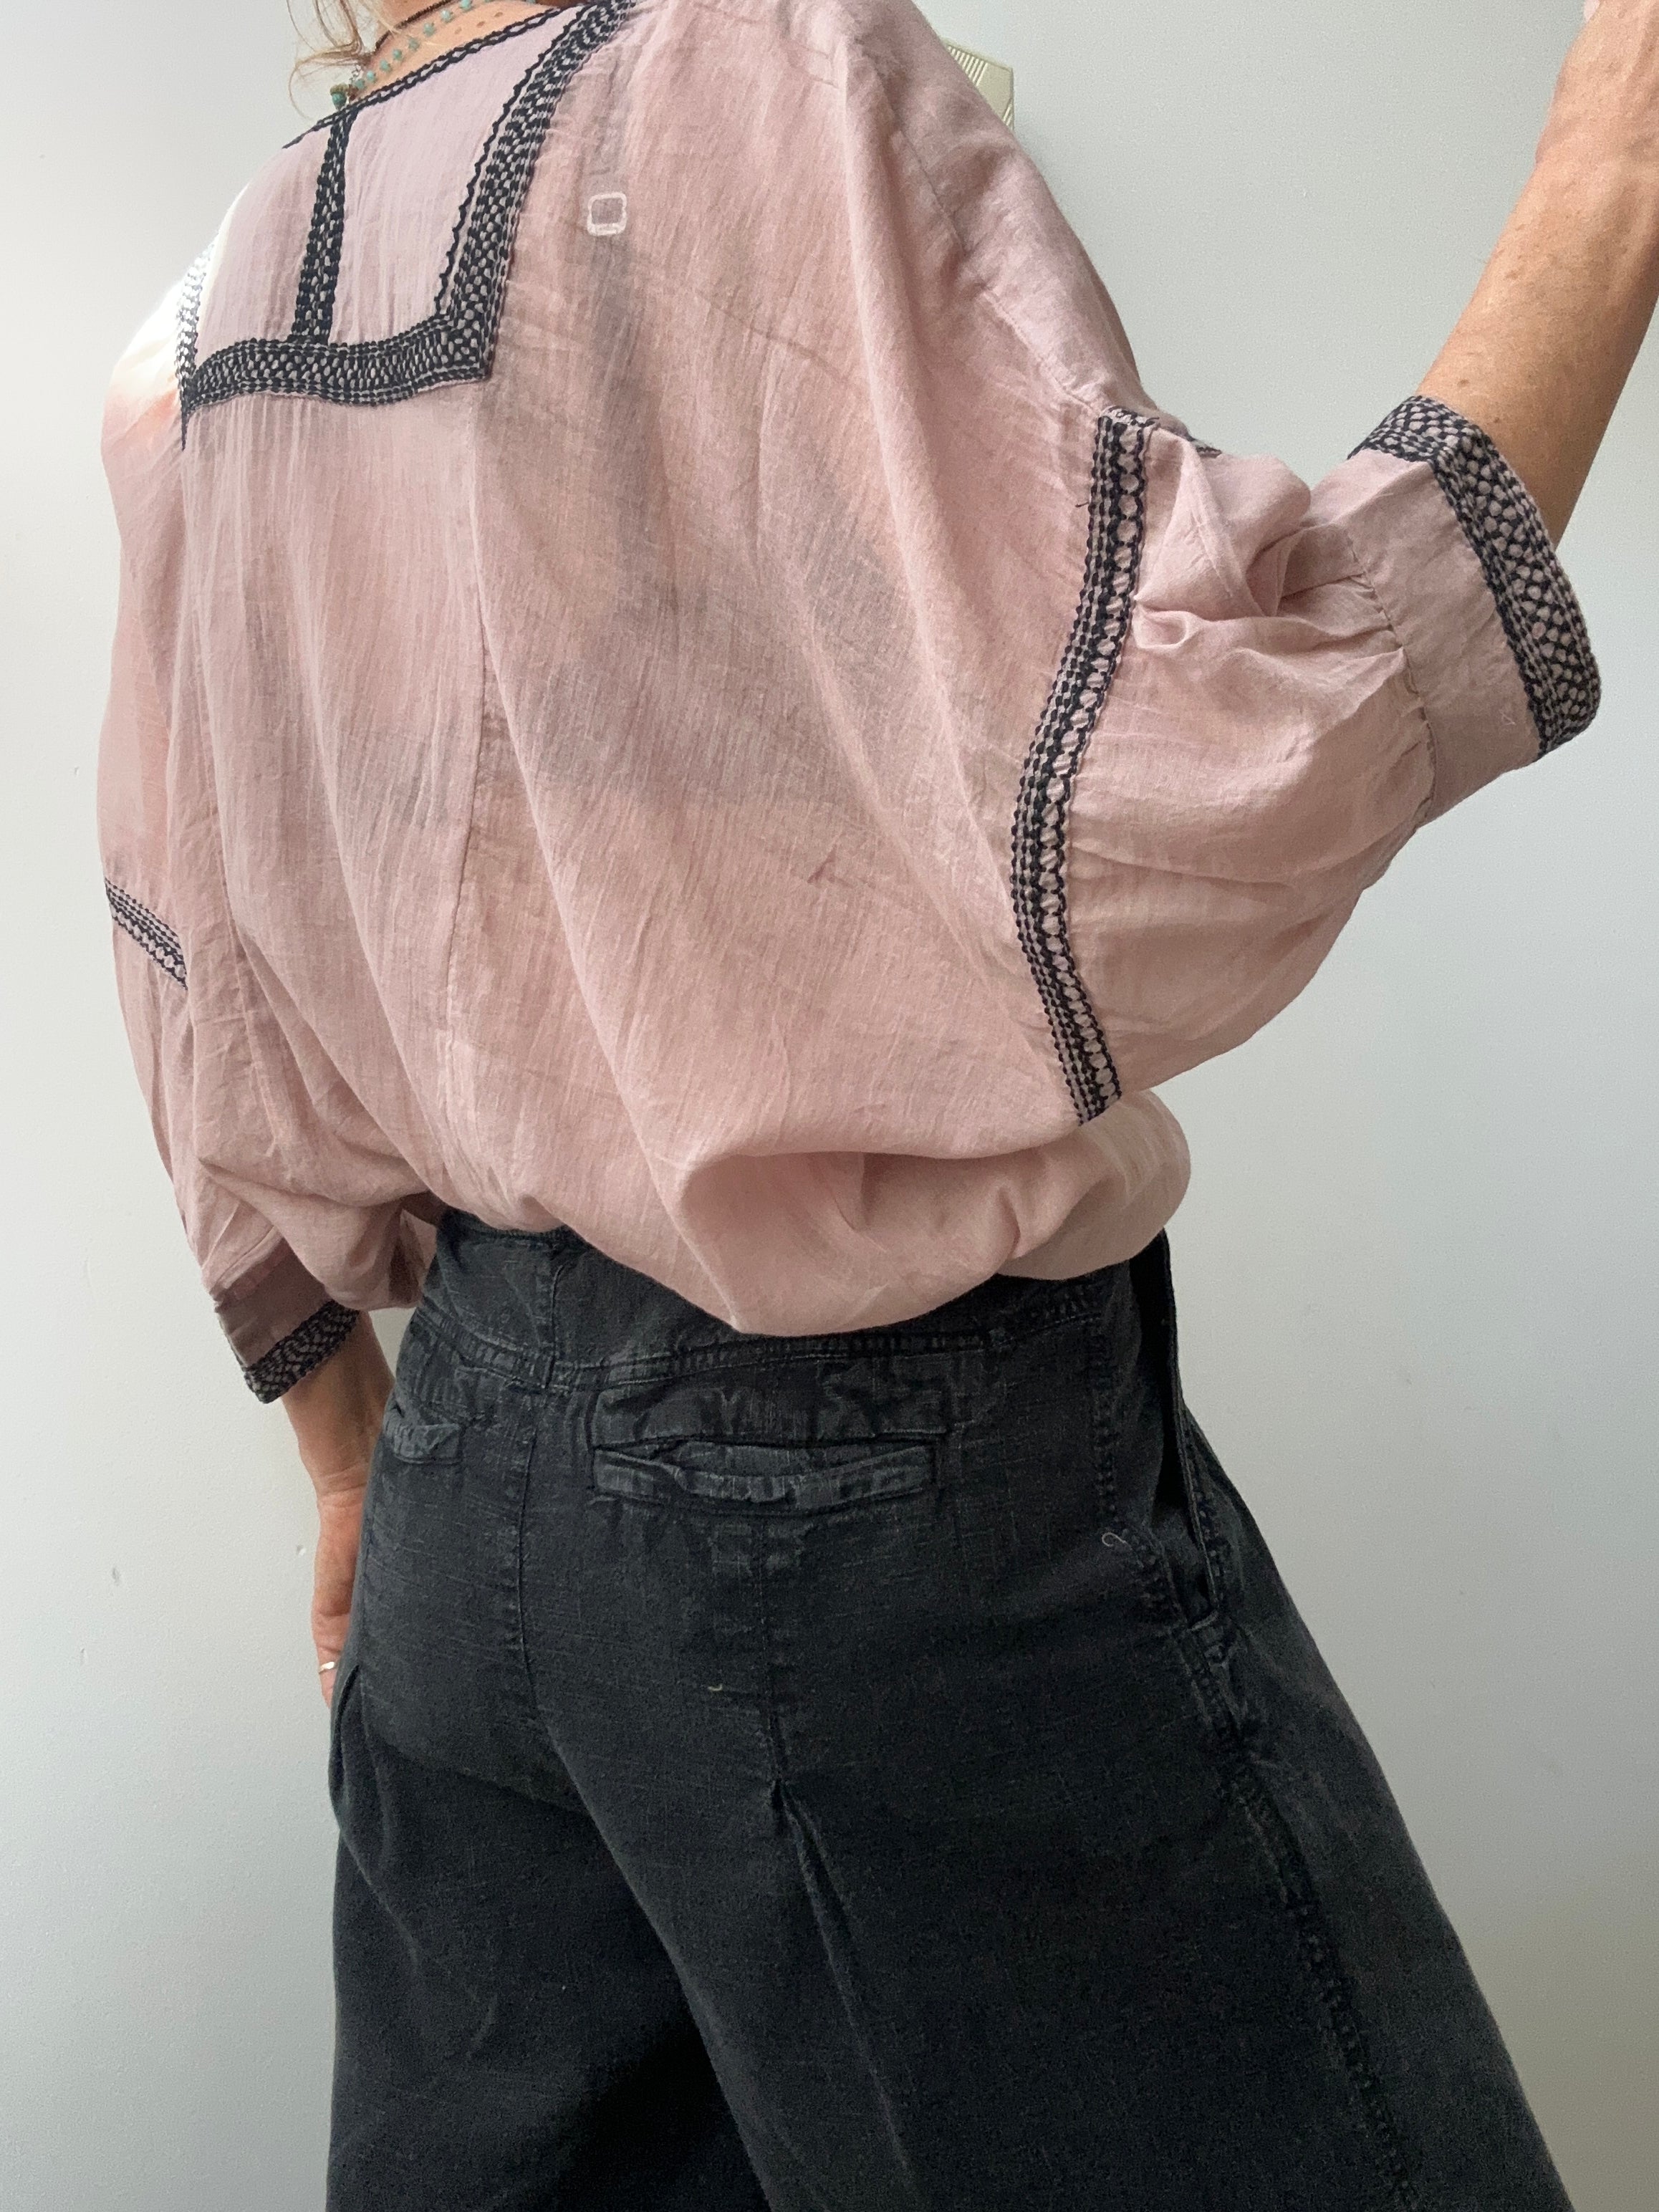 Jetsetbohemian Tops One Size Cotton Bib Blouse in Dusty Pink